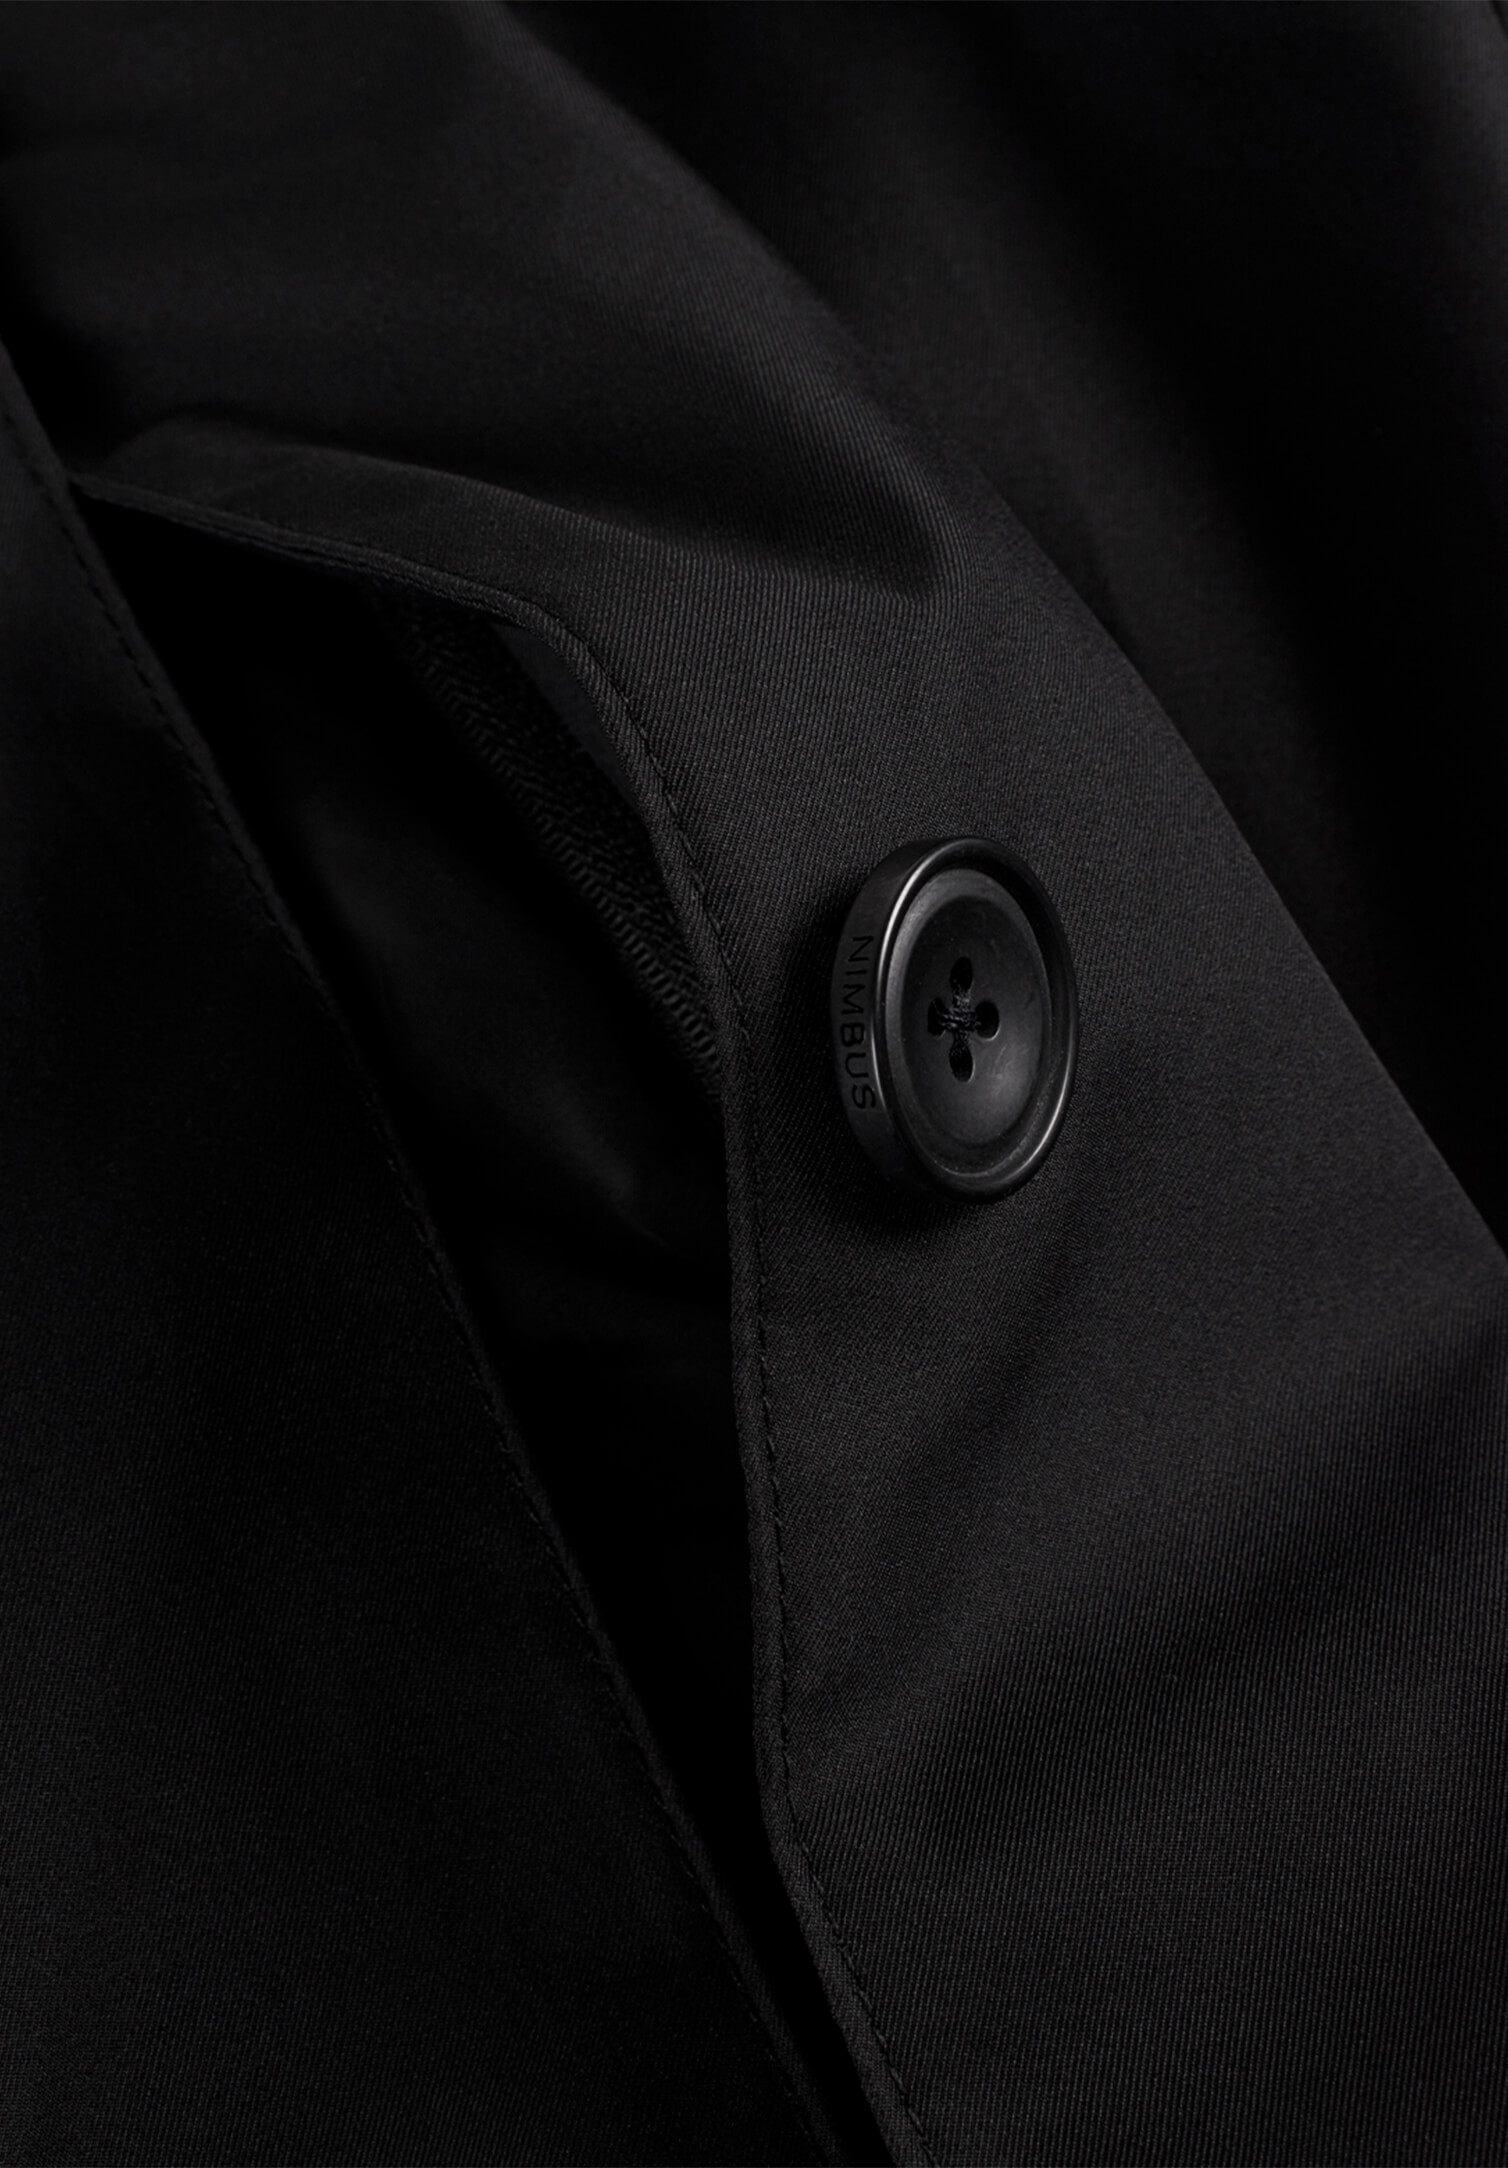 Damen Long Jacket mit Windleiste - schwarz - XS